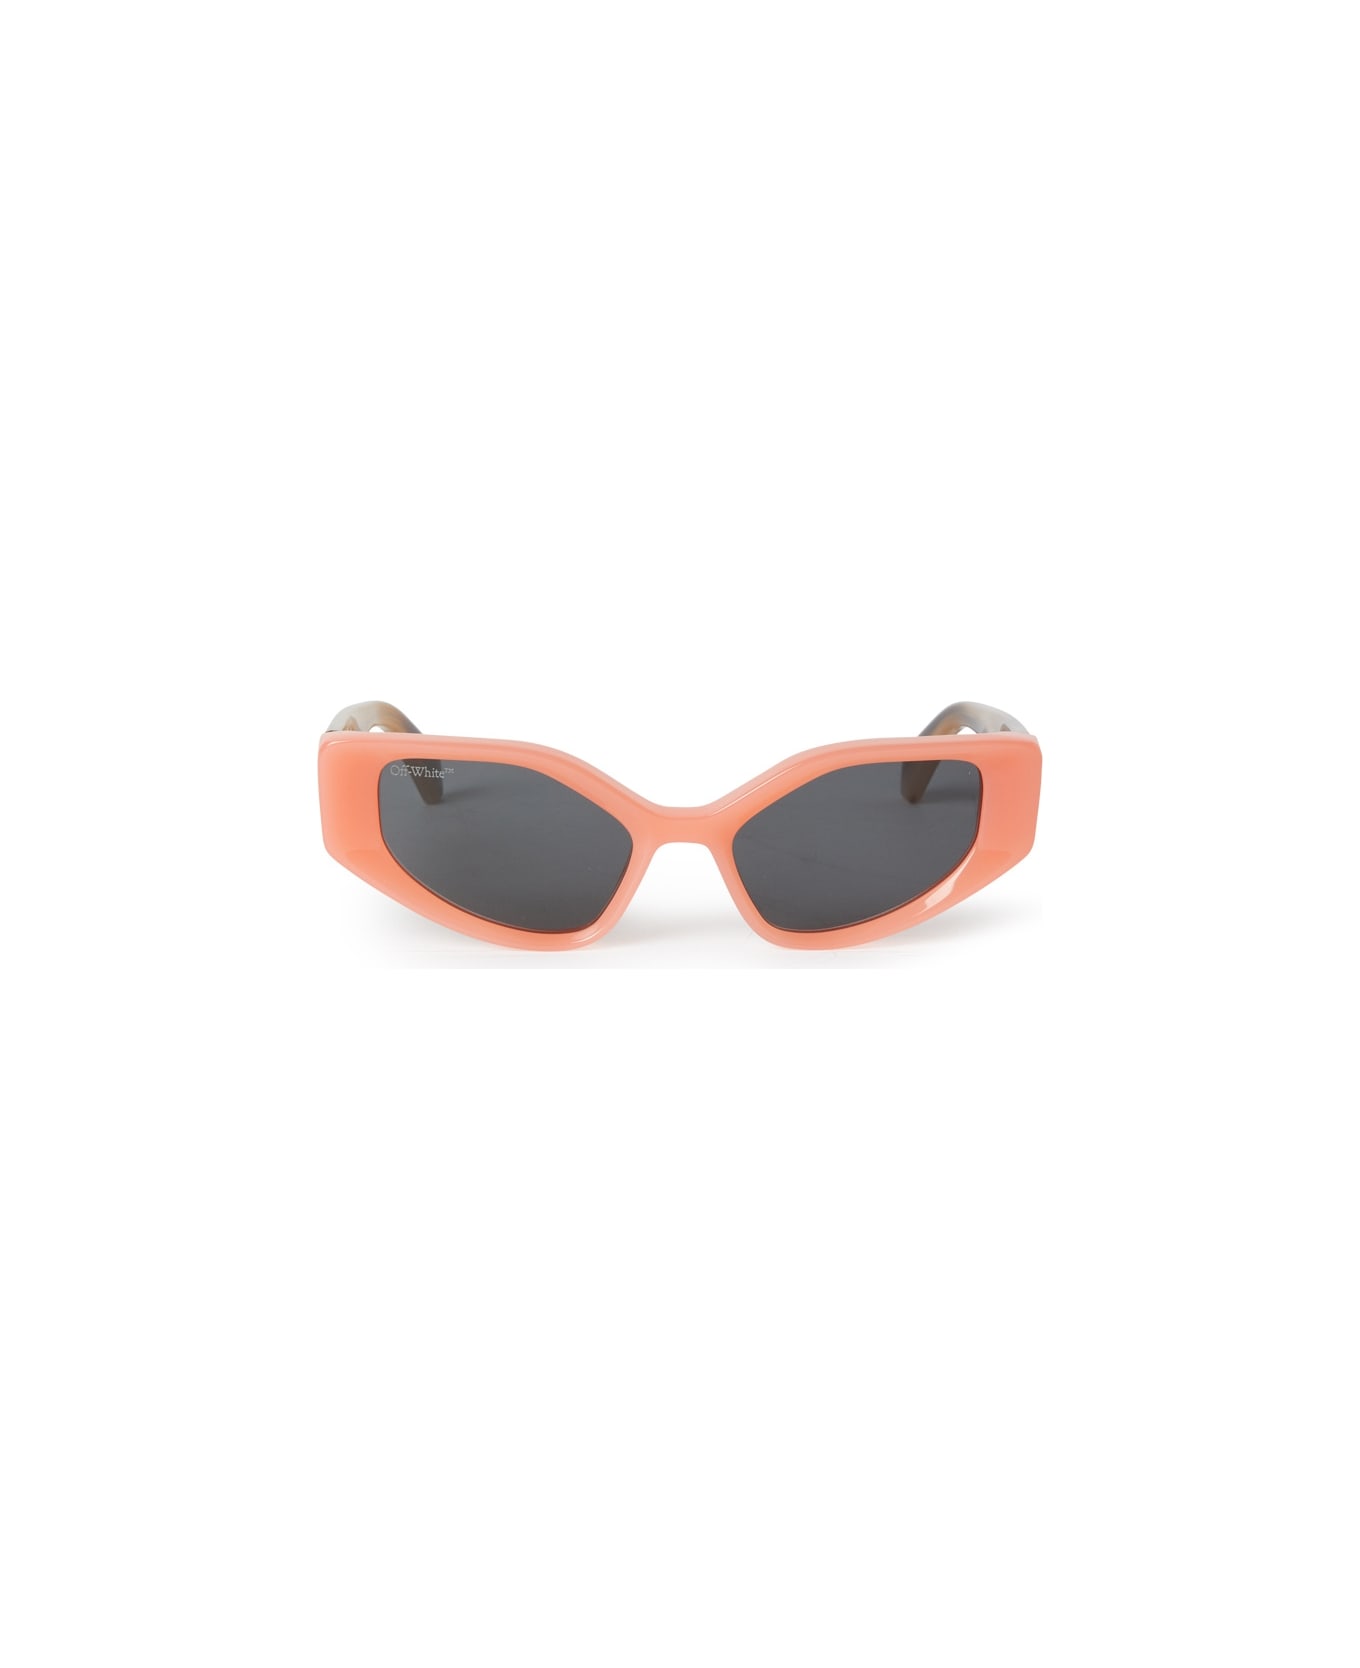 Off-White MEMPHIS SUNGLASSES Sunglasses - Orange